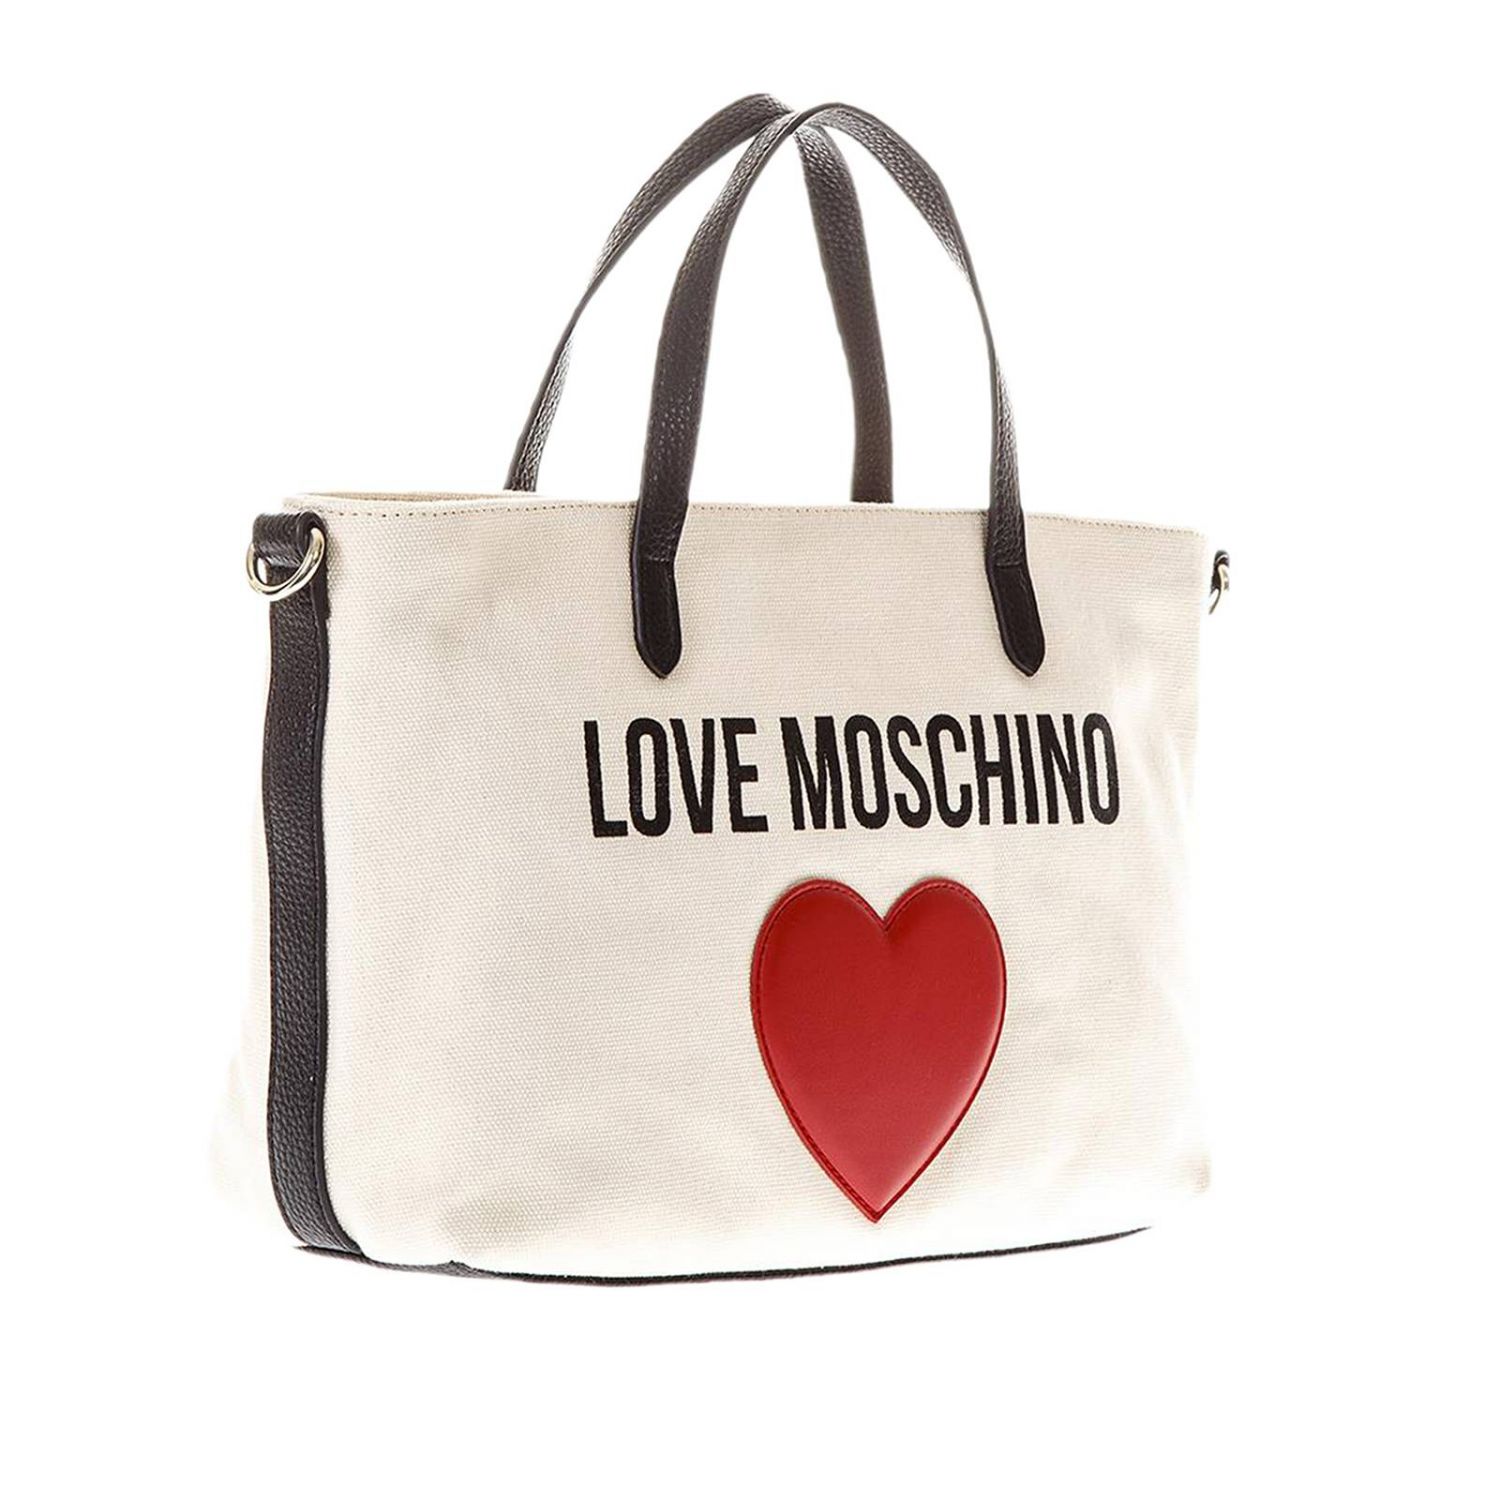 Love Moschino Outlet: Handbag women Moschino Love - Beige | Handbag ...